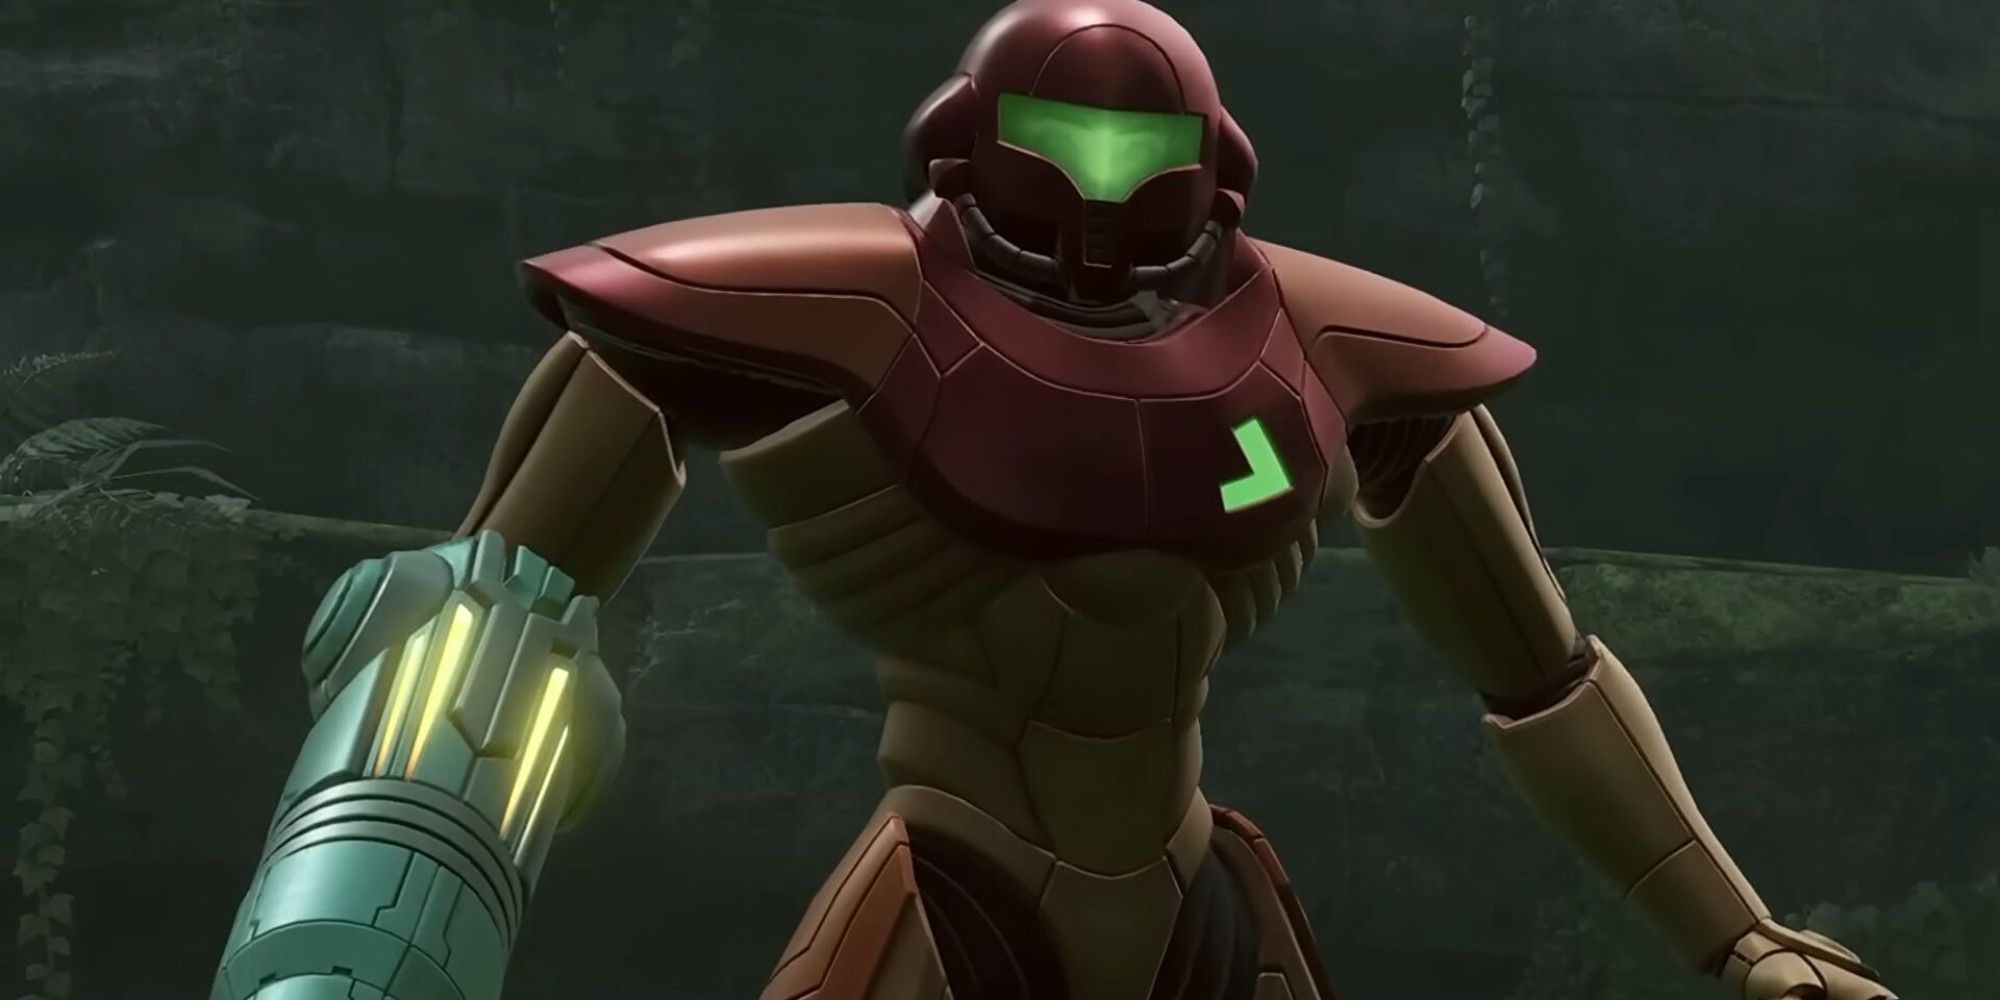 Samus Aran in a suit from Metroid Prime